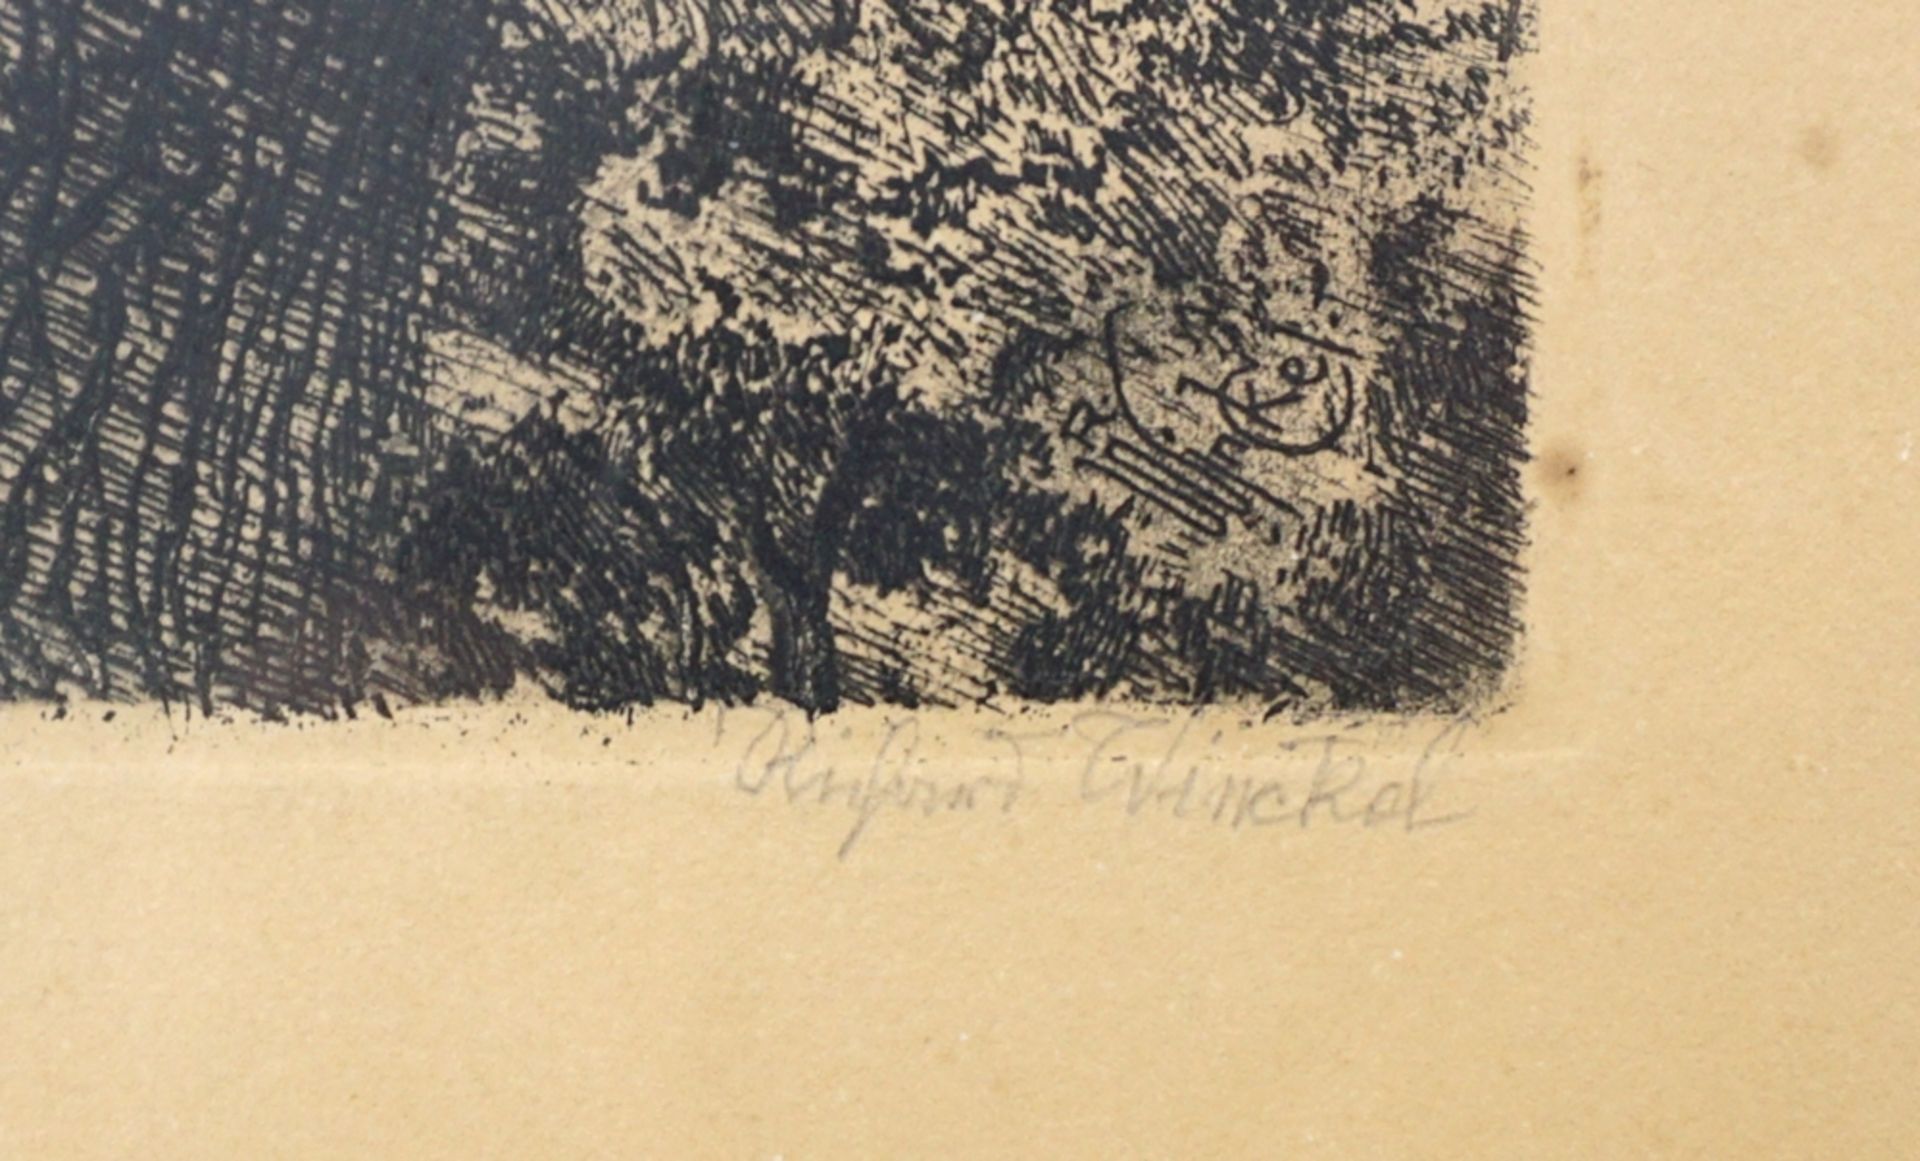 Richard Winckel (1870, Berleburg - 1941, Magdeburg), "Kastanienbaum", ca. 1930, Radierung - Image 2 of 2